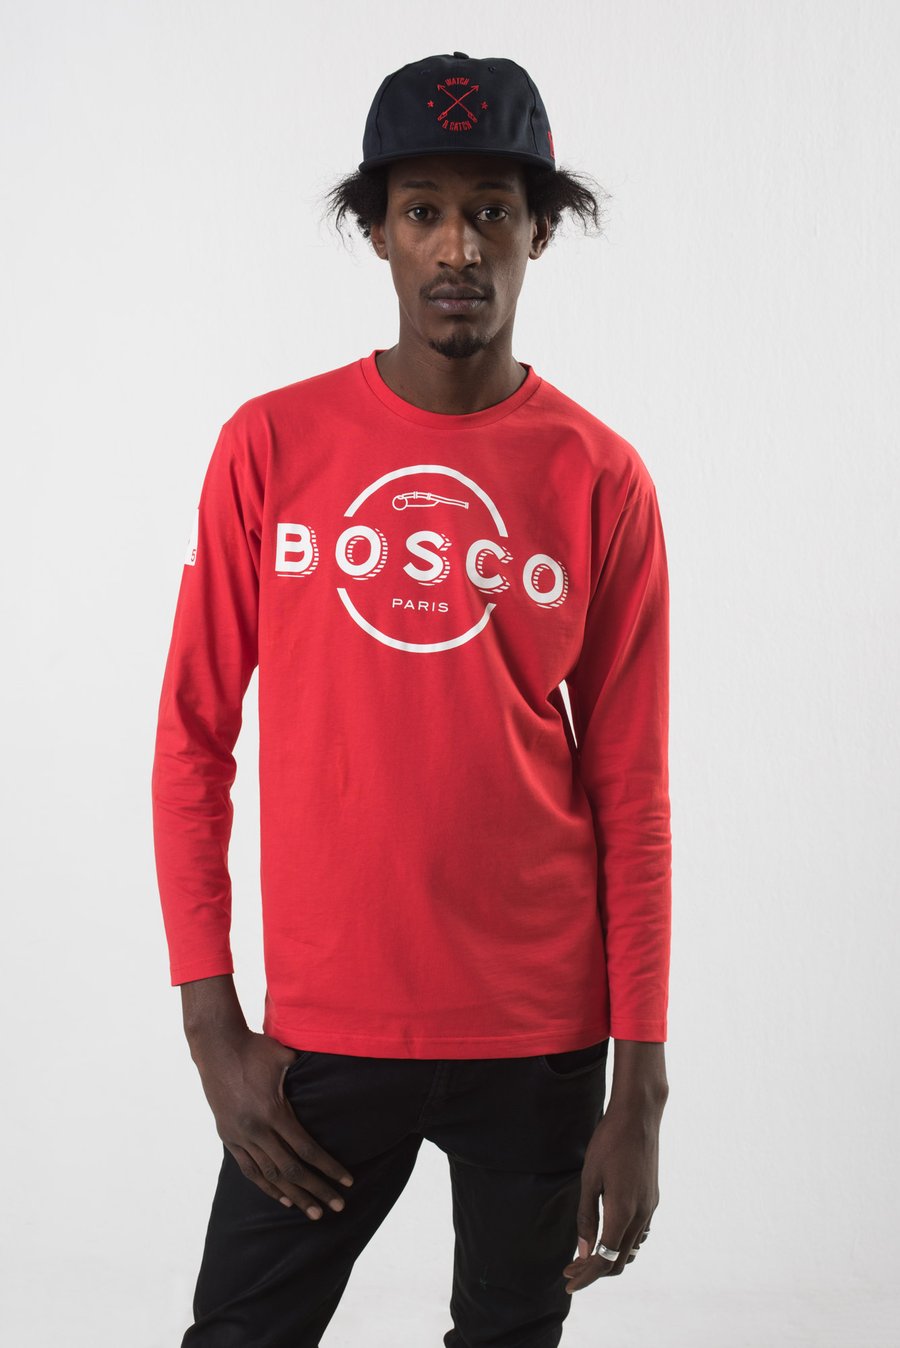 Image of  BOSCO PARIS T-shirt long sleeves full logo